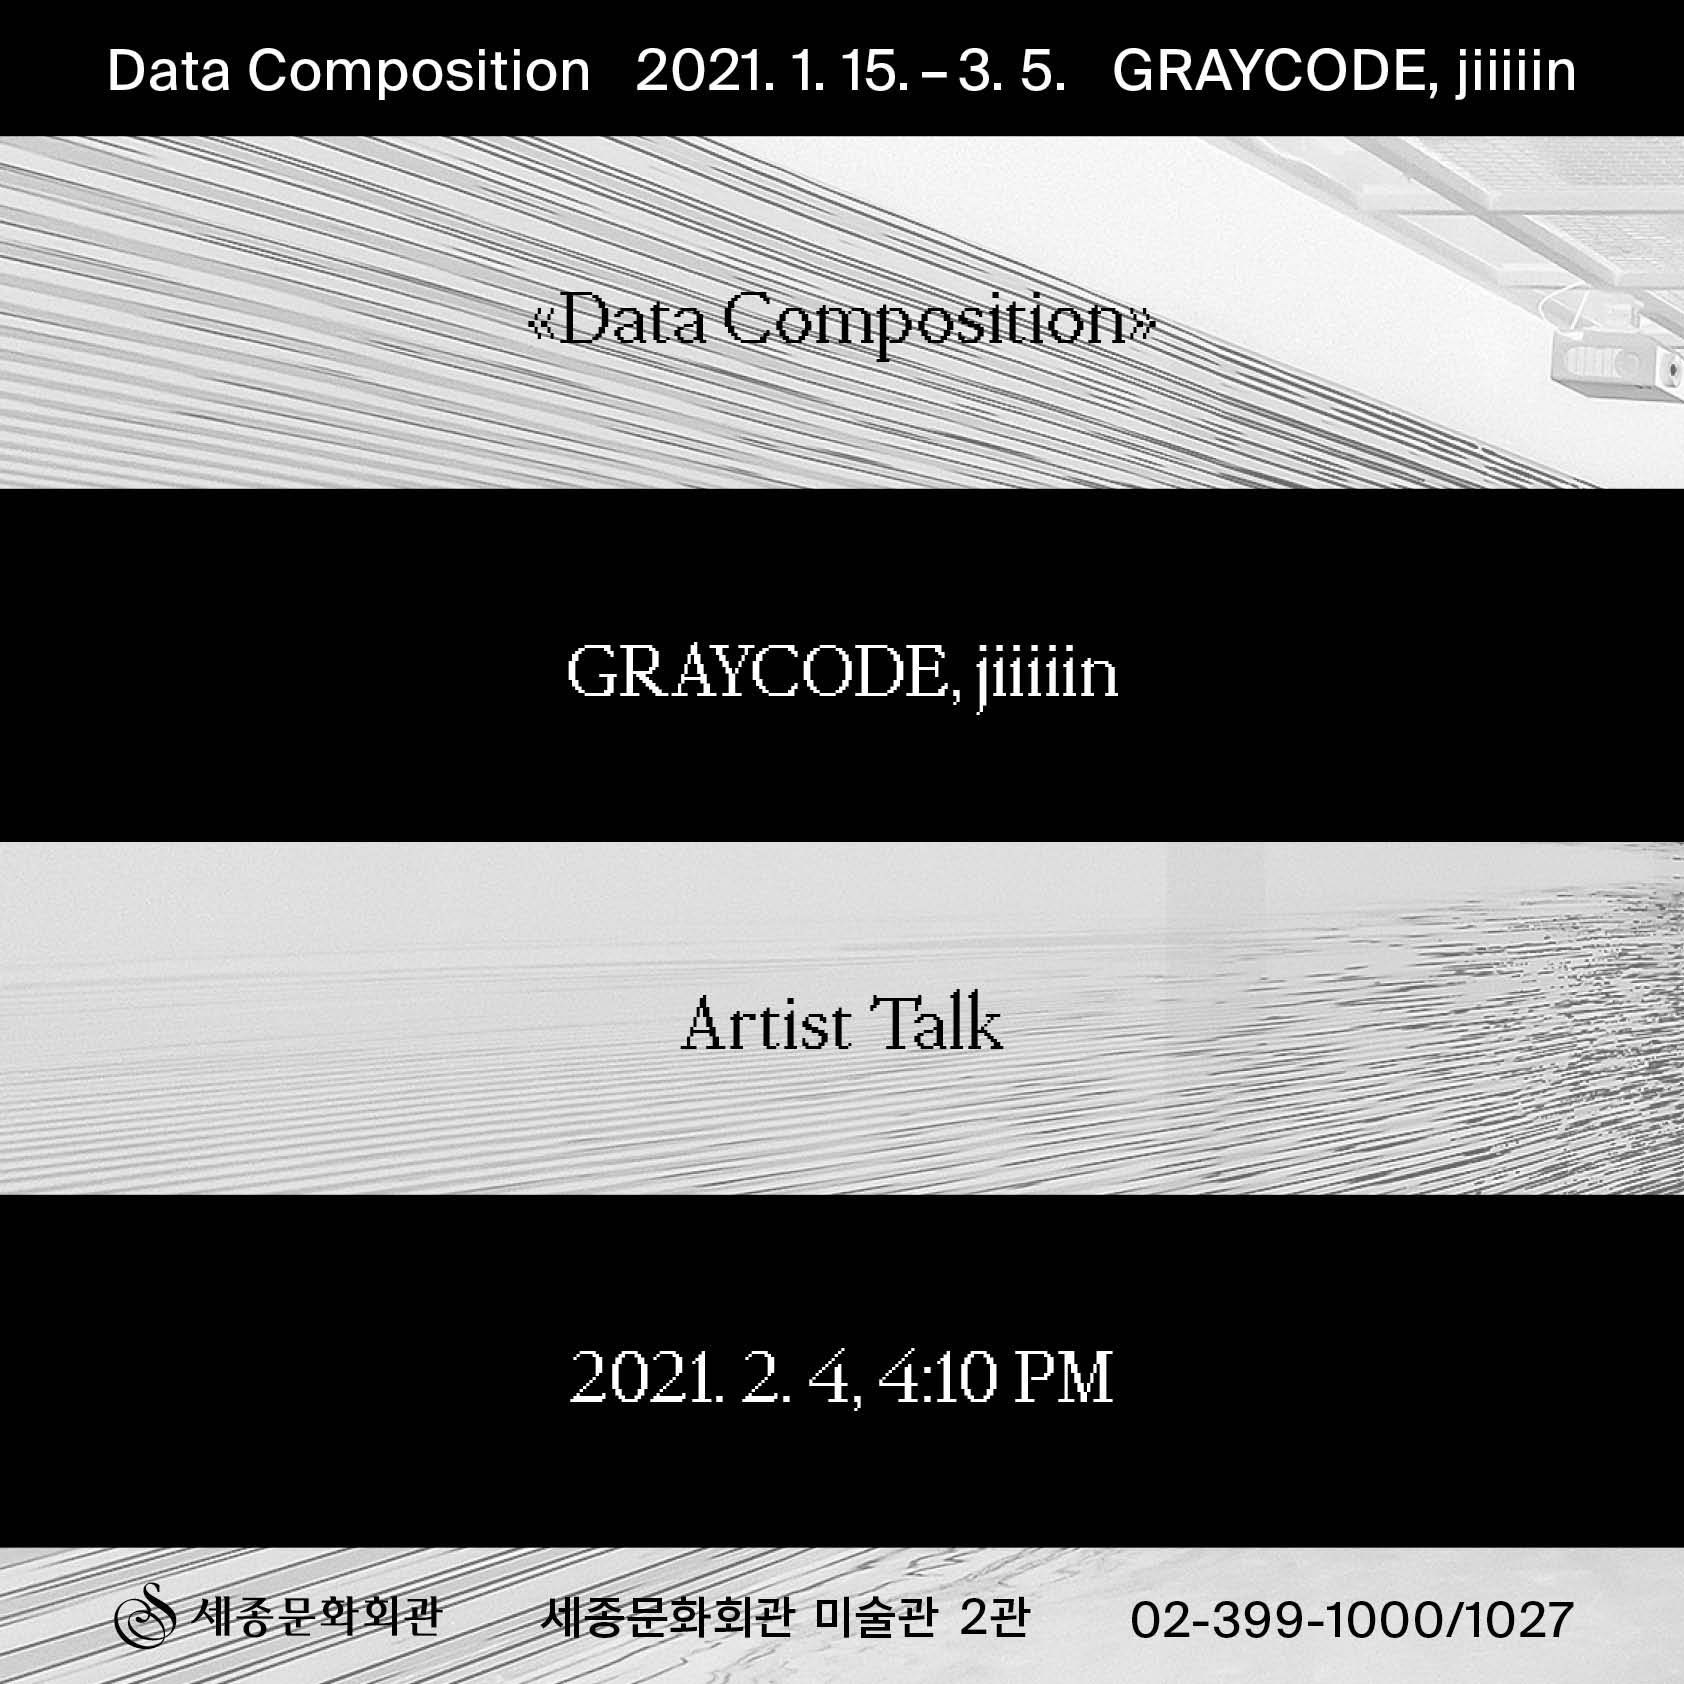 GRAYCODE, jiiiiin Exhibits 《Data Composition》 at Sejong Center